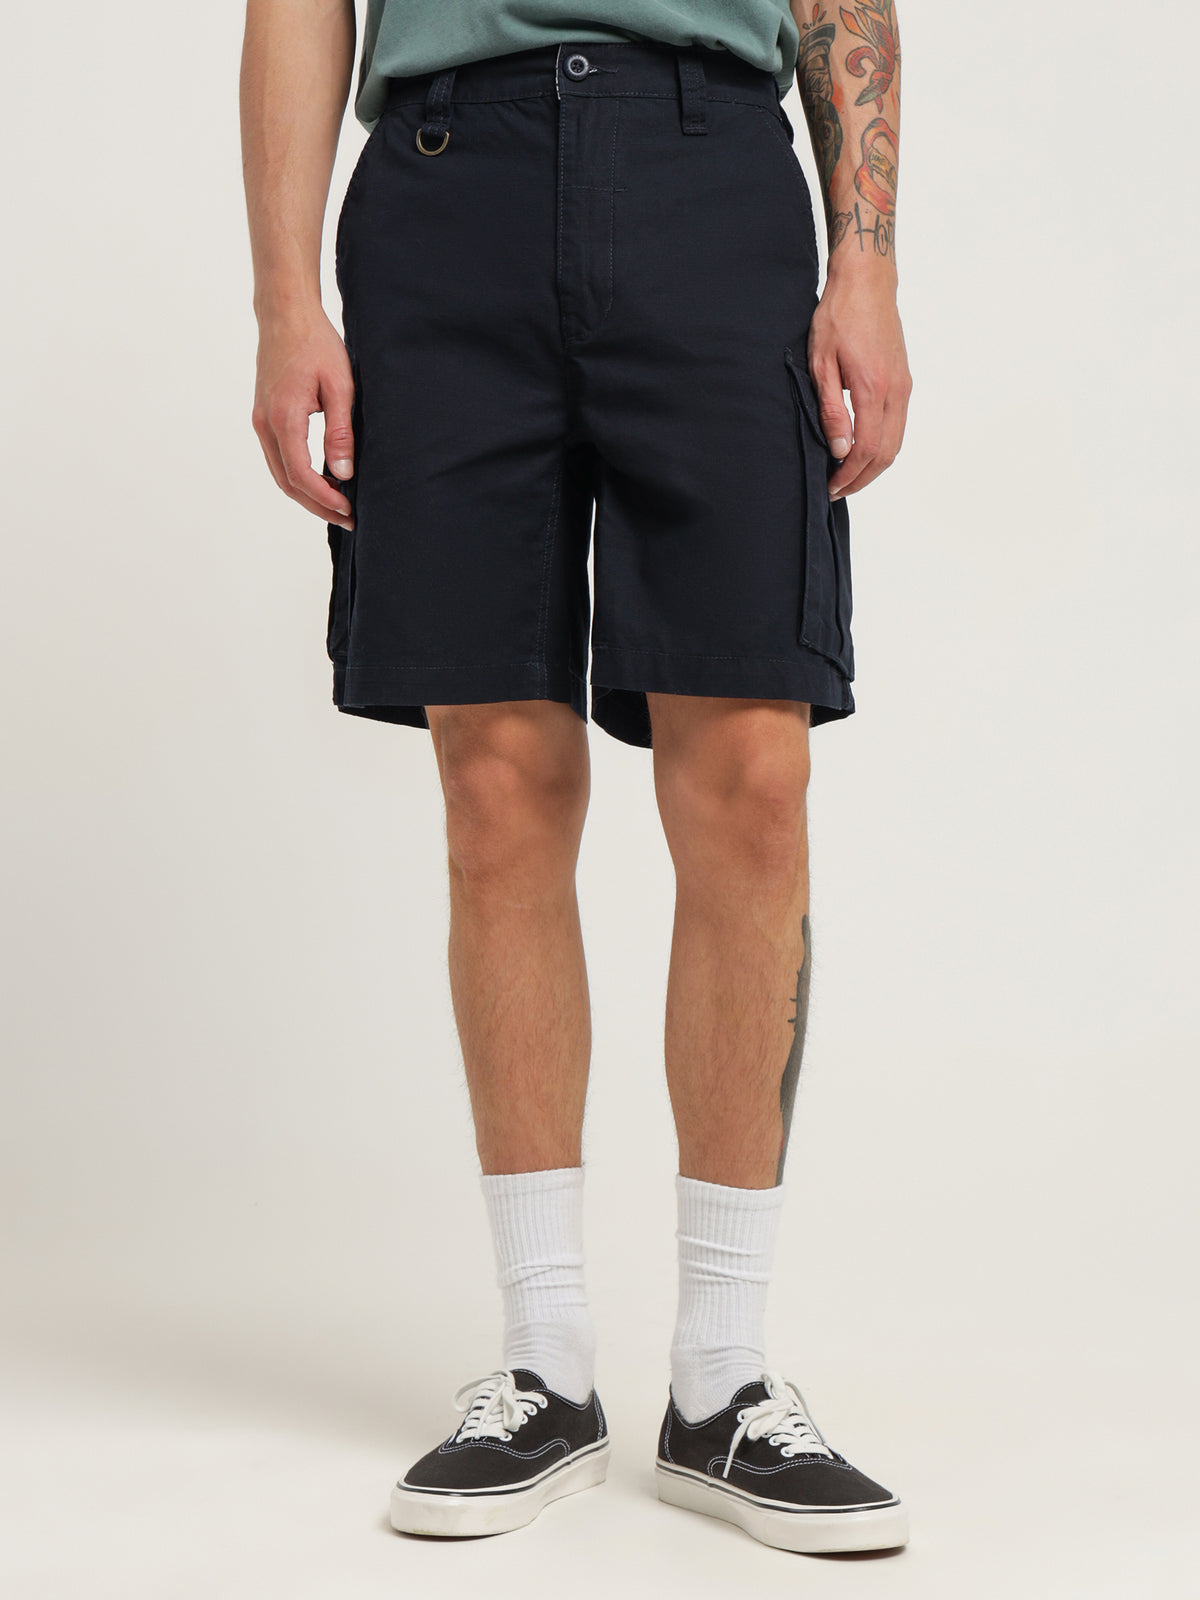 Slacker Shorts in Navy